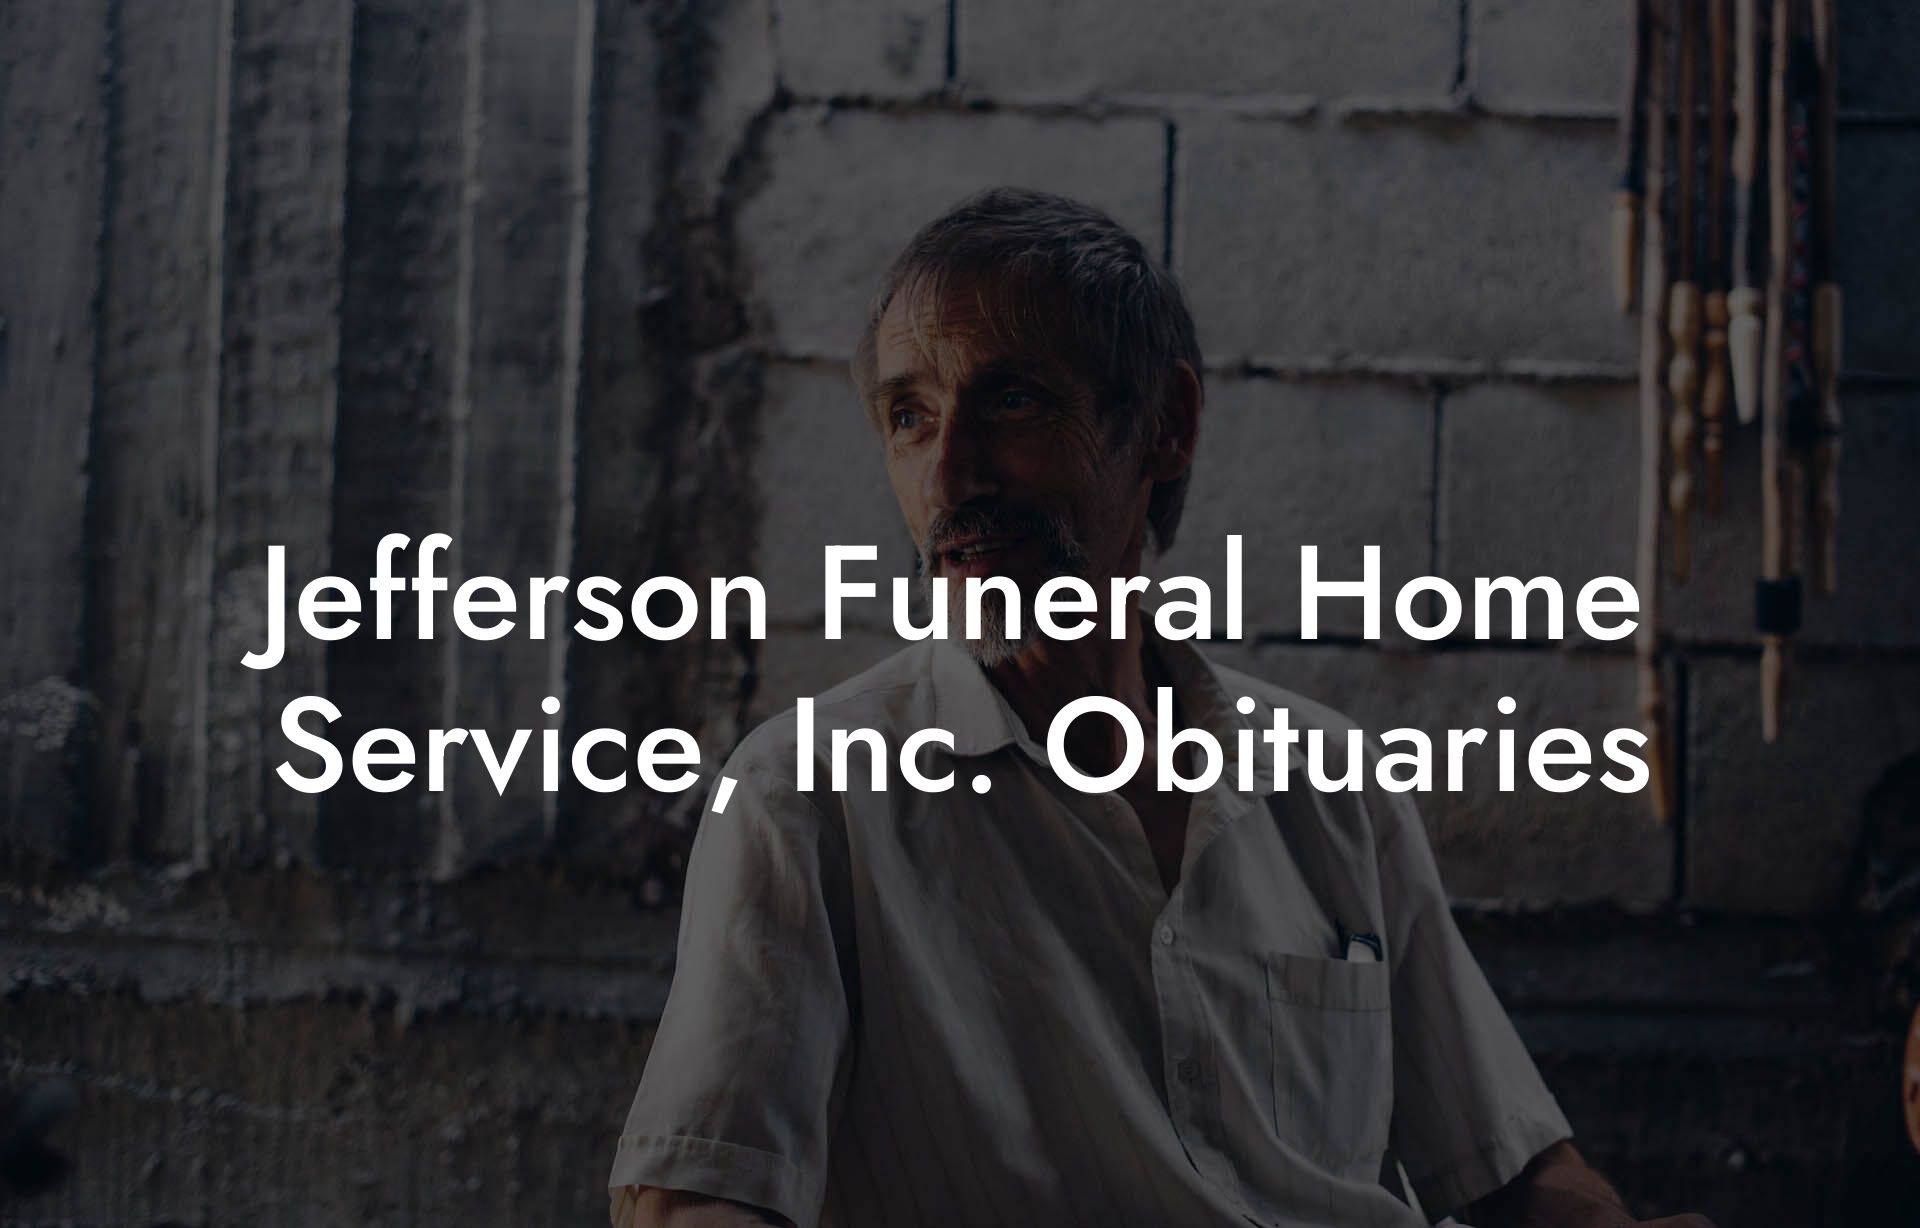 Jefferson Funeral Home Service, Inc. Obituaries